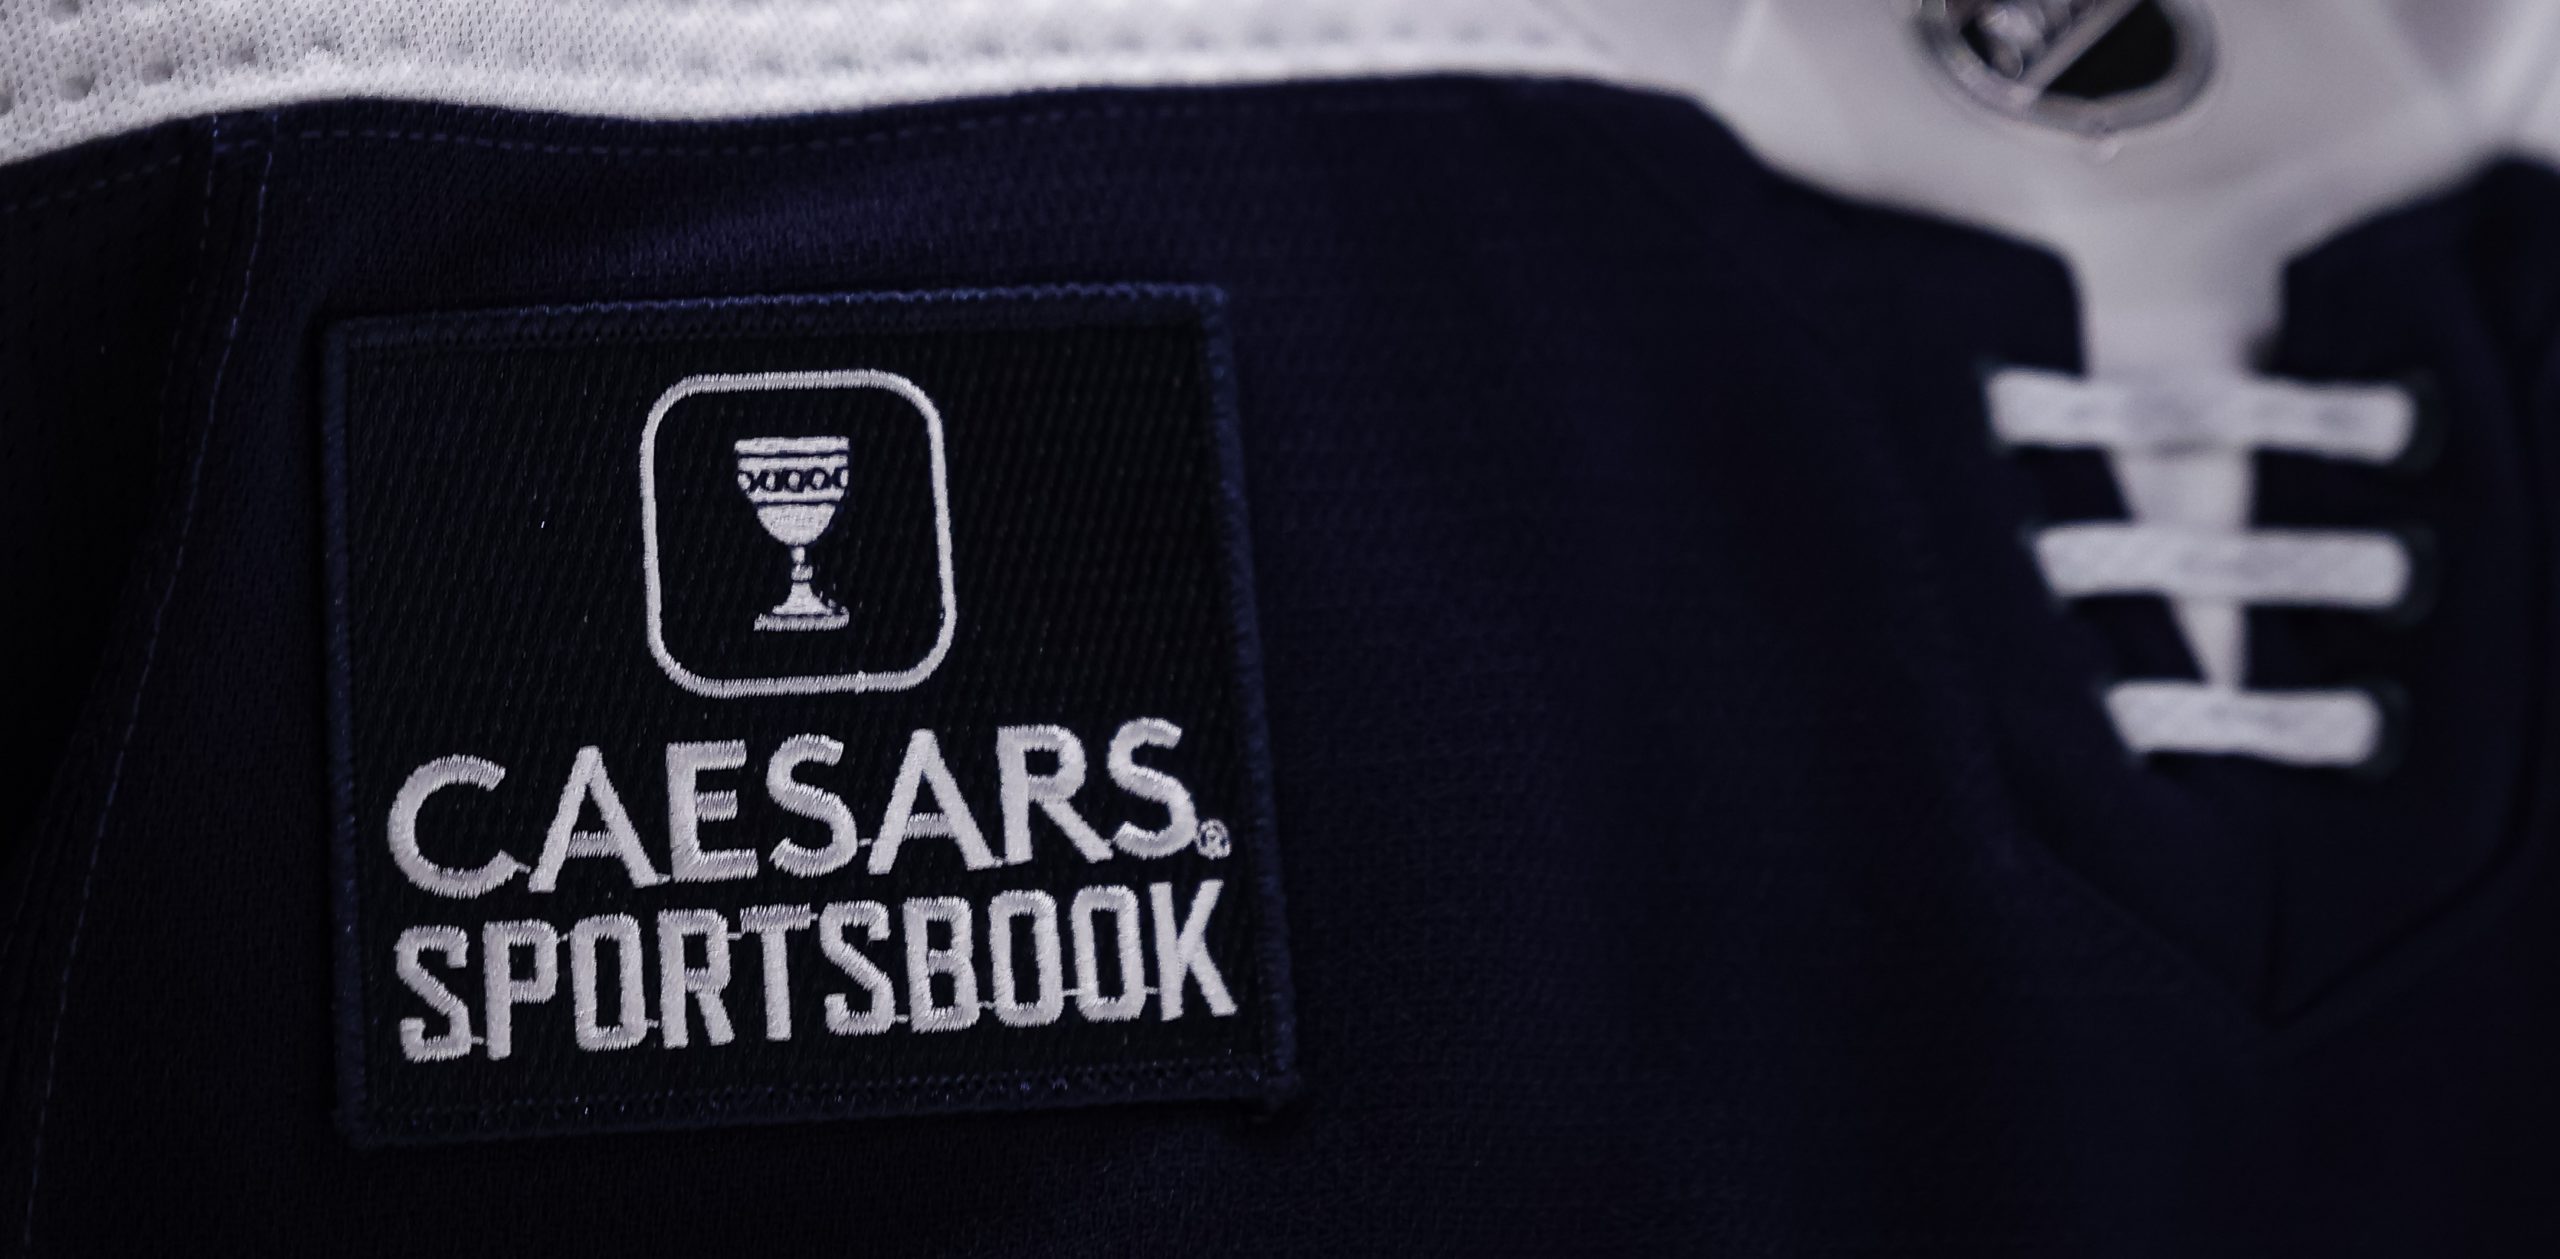 caesars sportsbook nfl jersey